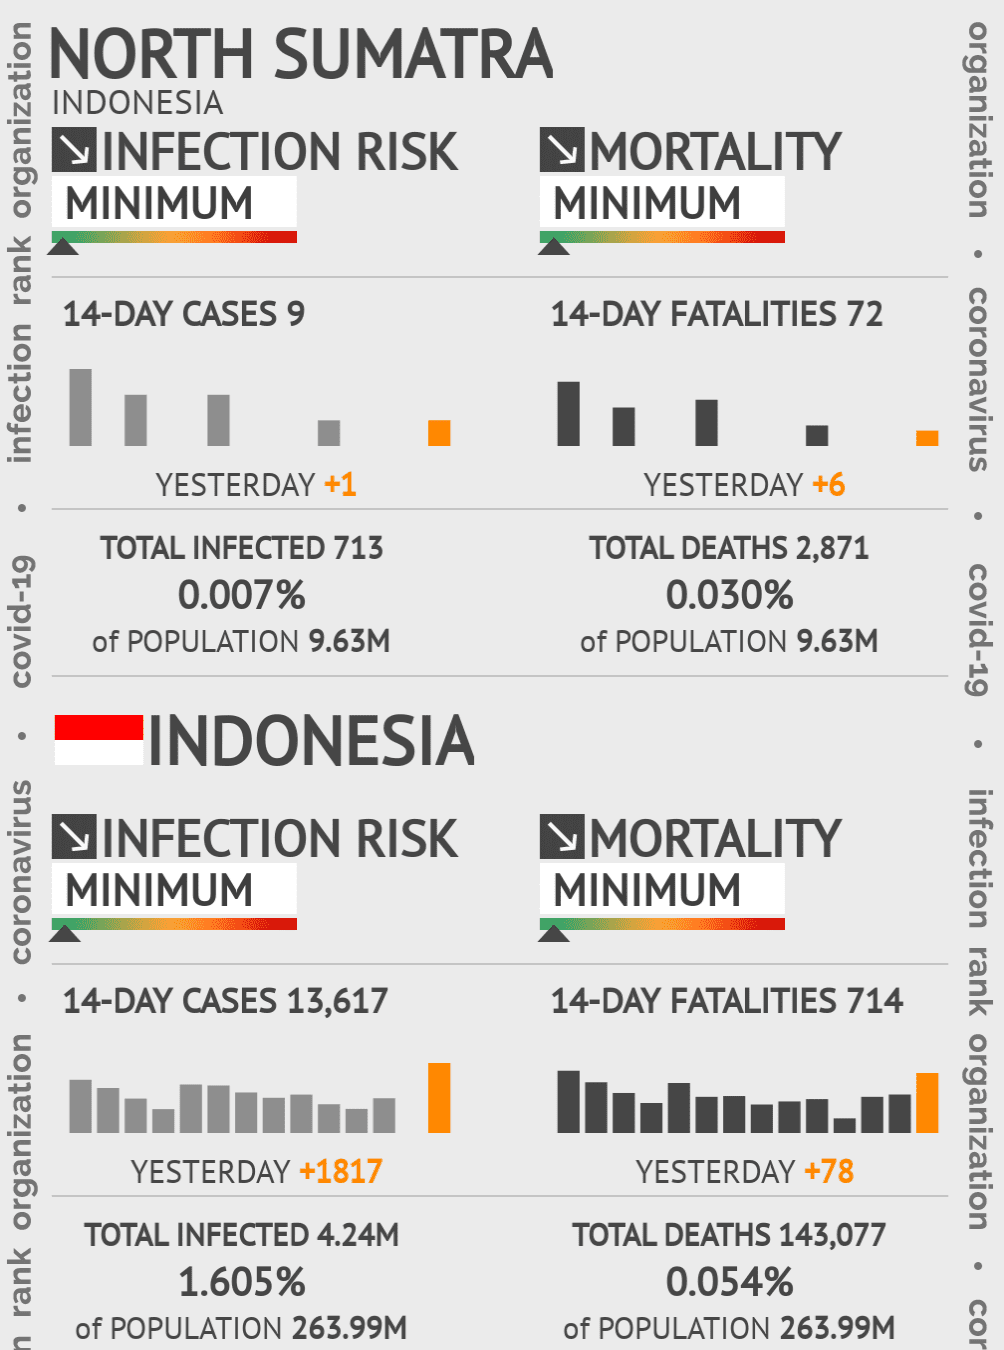 North Sumatra Coronavirus Covid-19 Risk of Infection on October 19, 2021